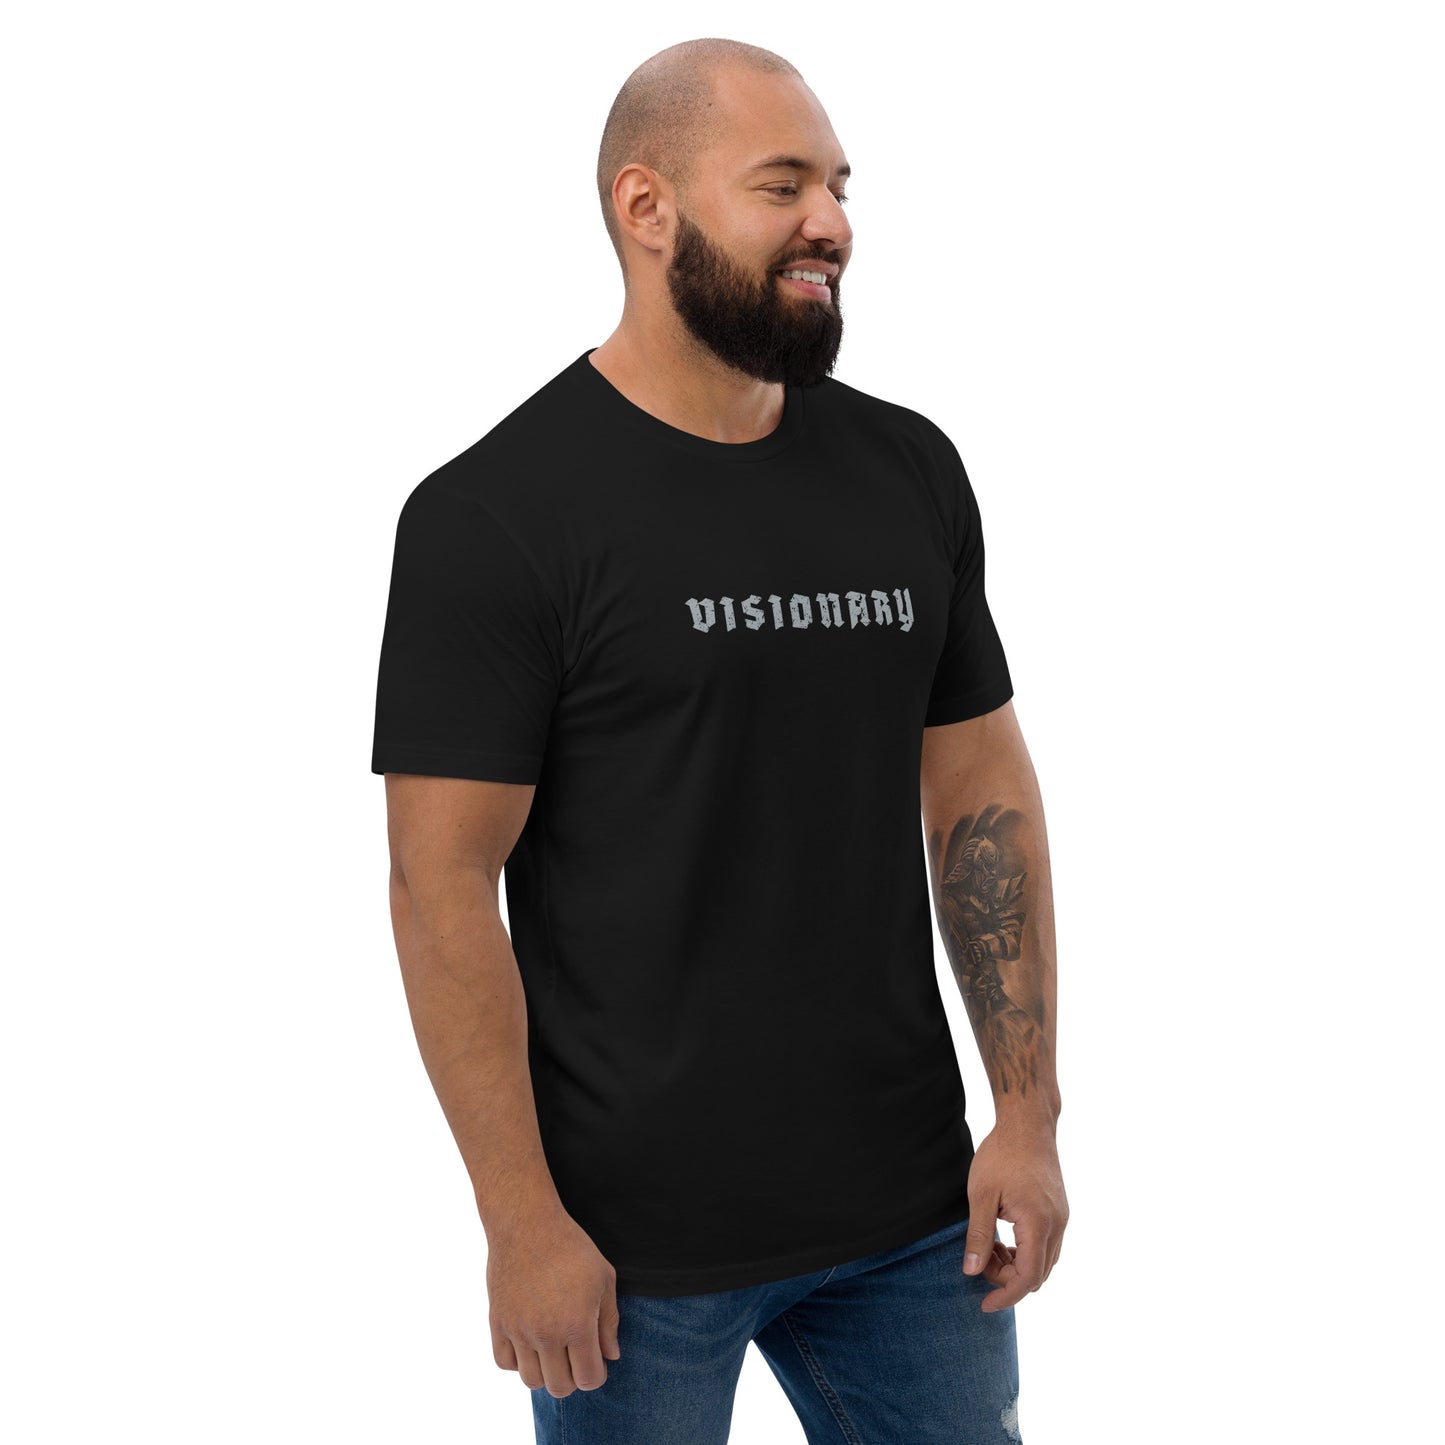 Visionary Unisex Shirt